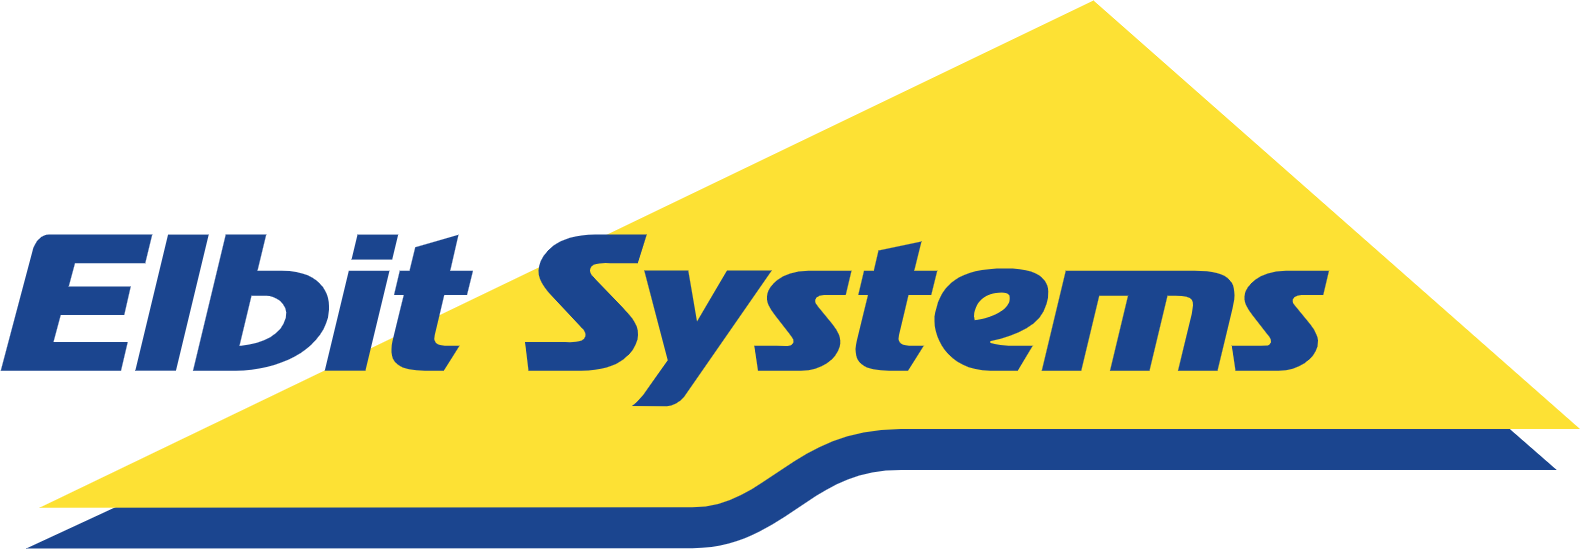 Elbit Systems
 logo (PNG transparent)